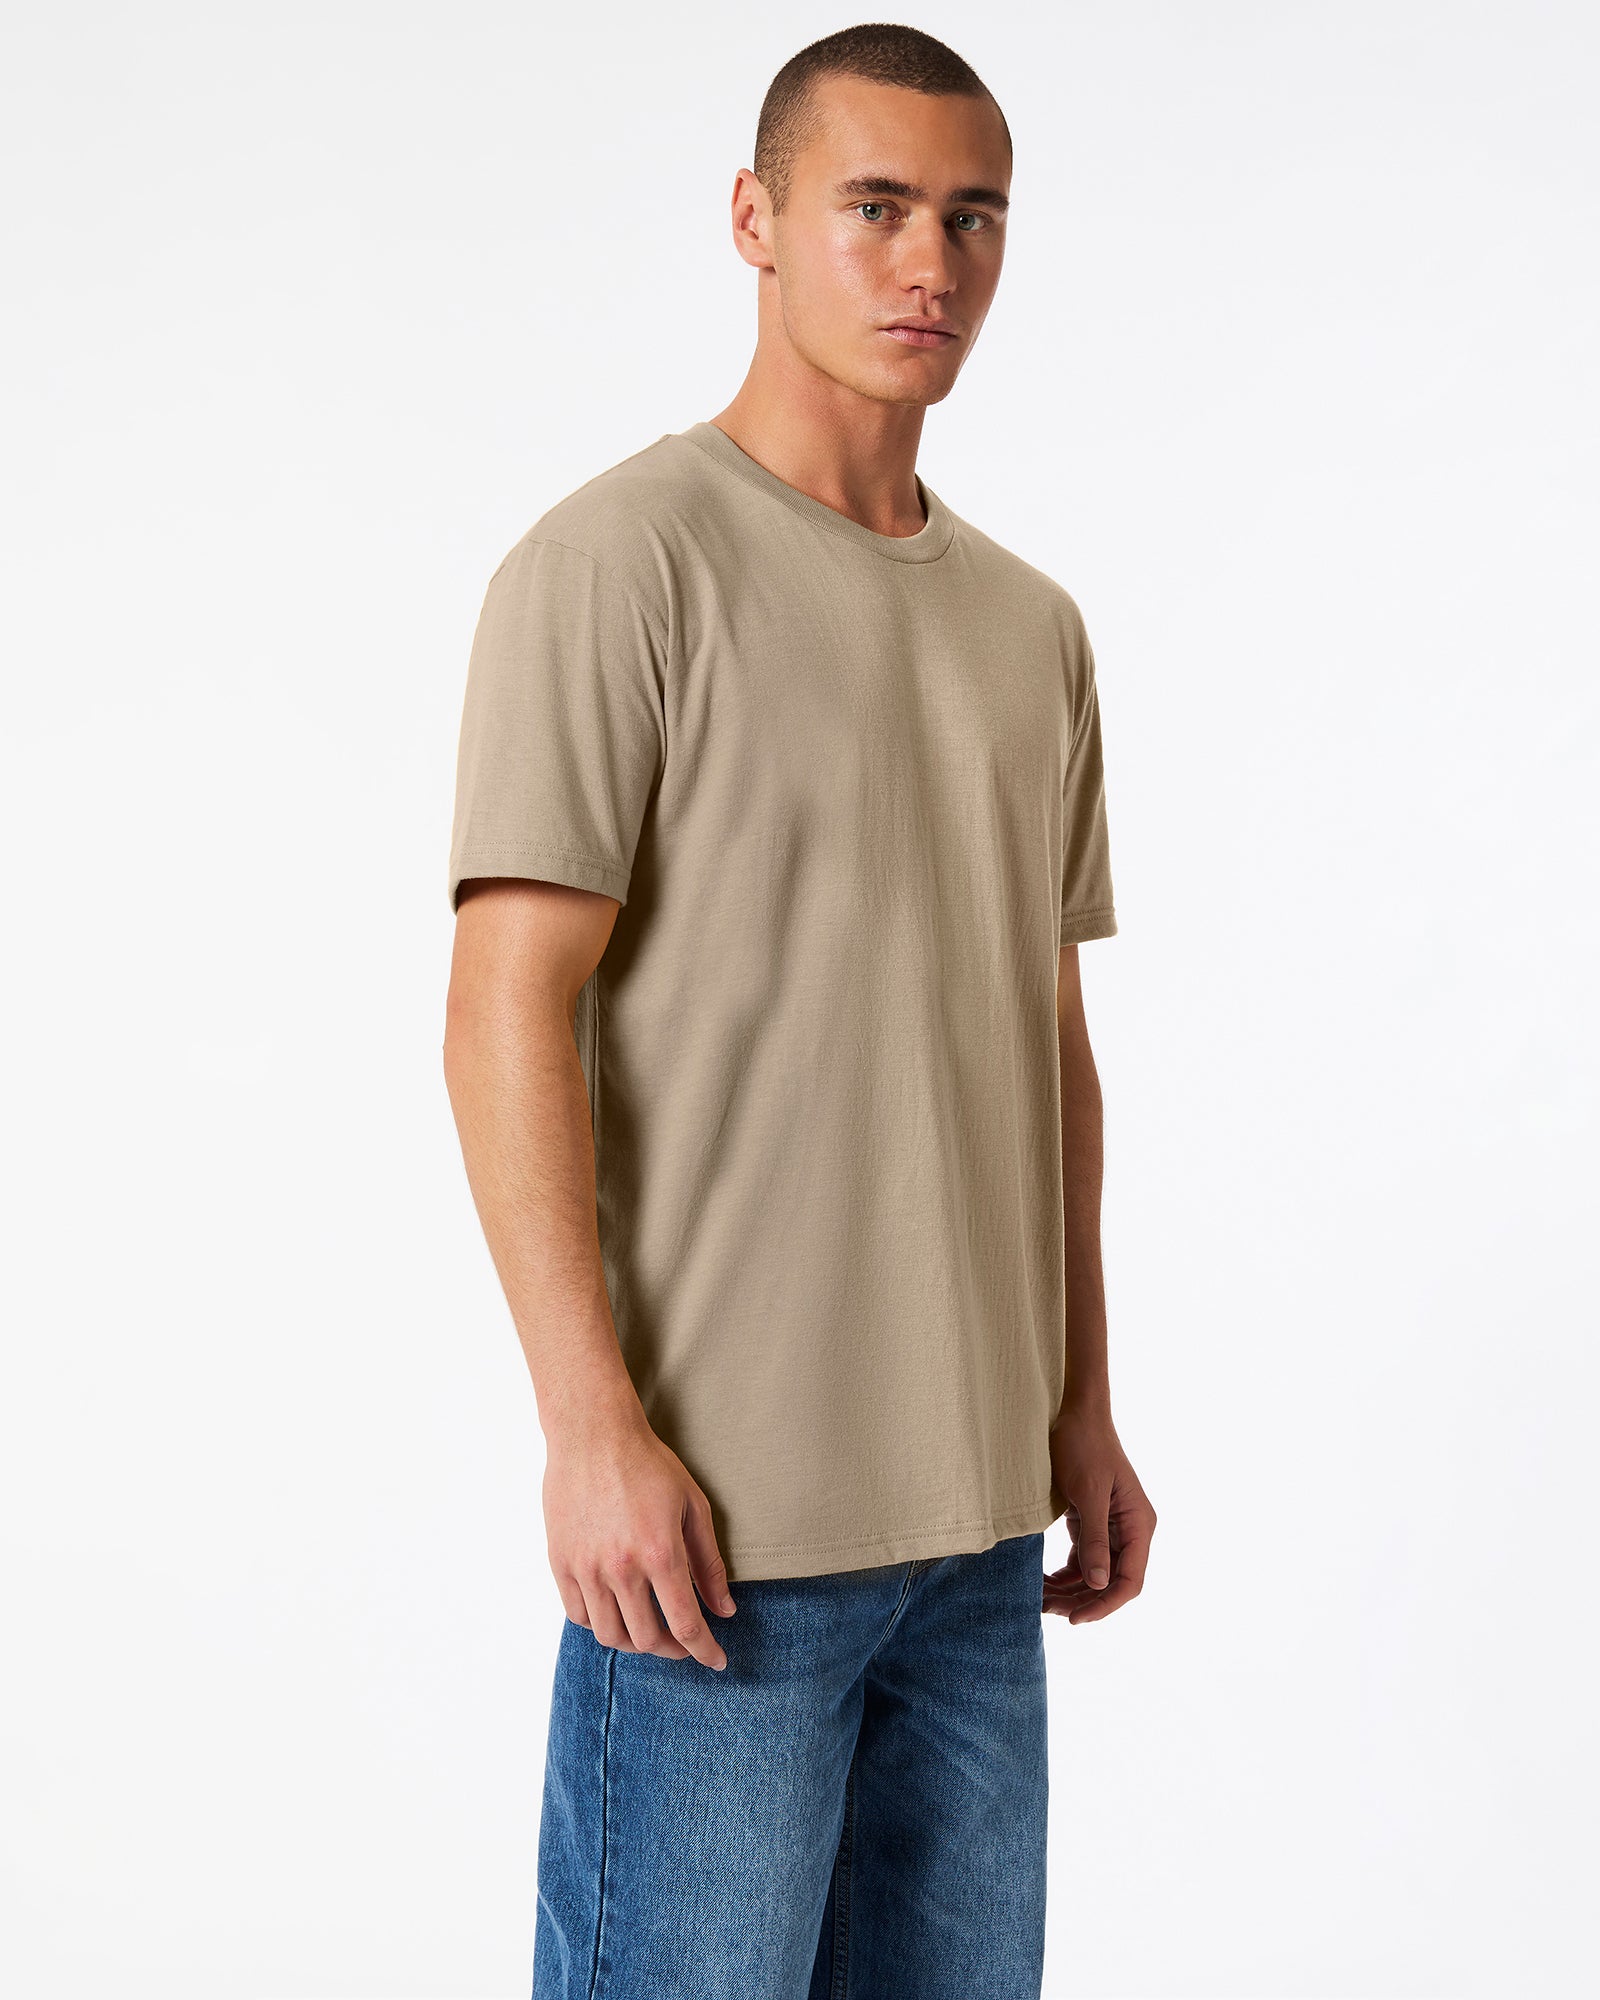 CVC Unisex Short Sleeve T-Shirt - Heather Bone